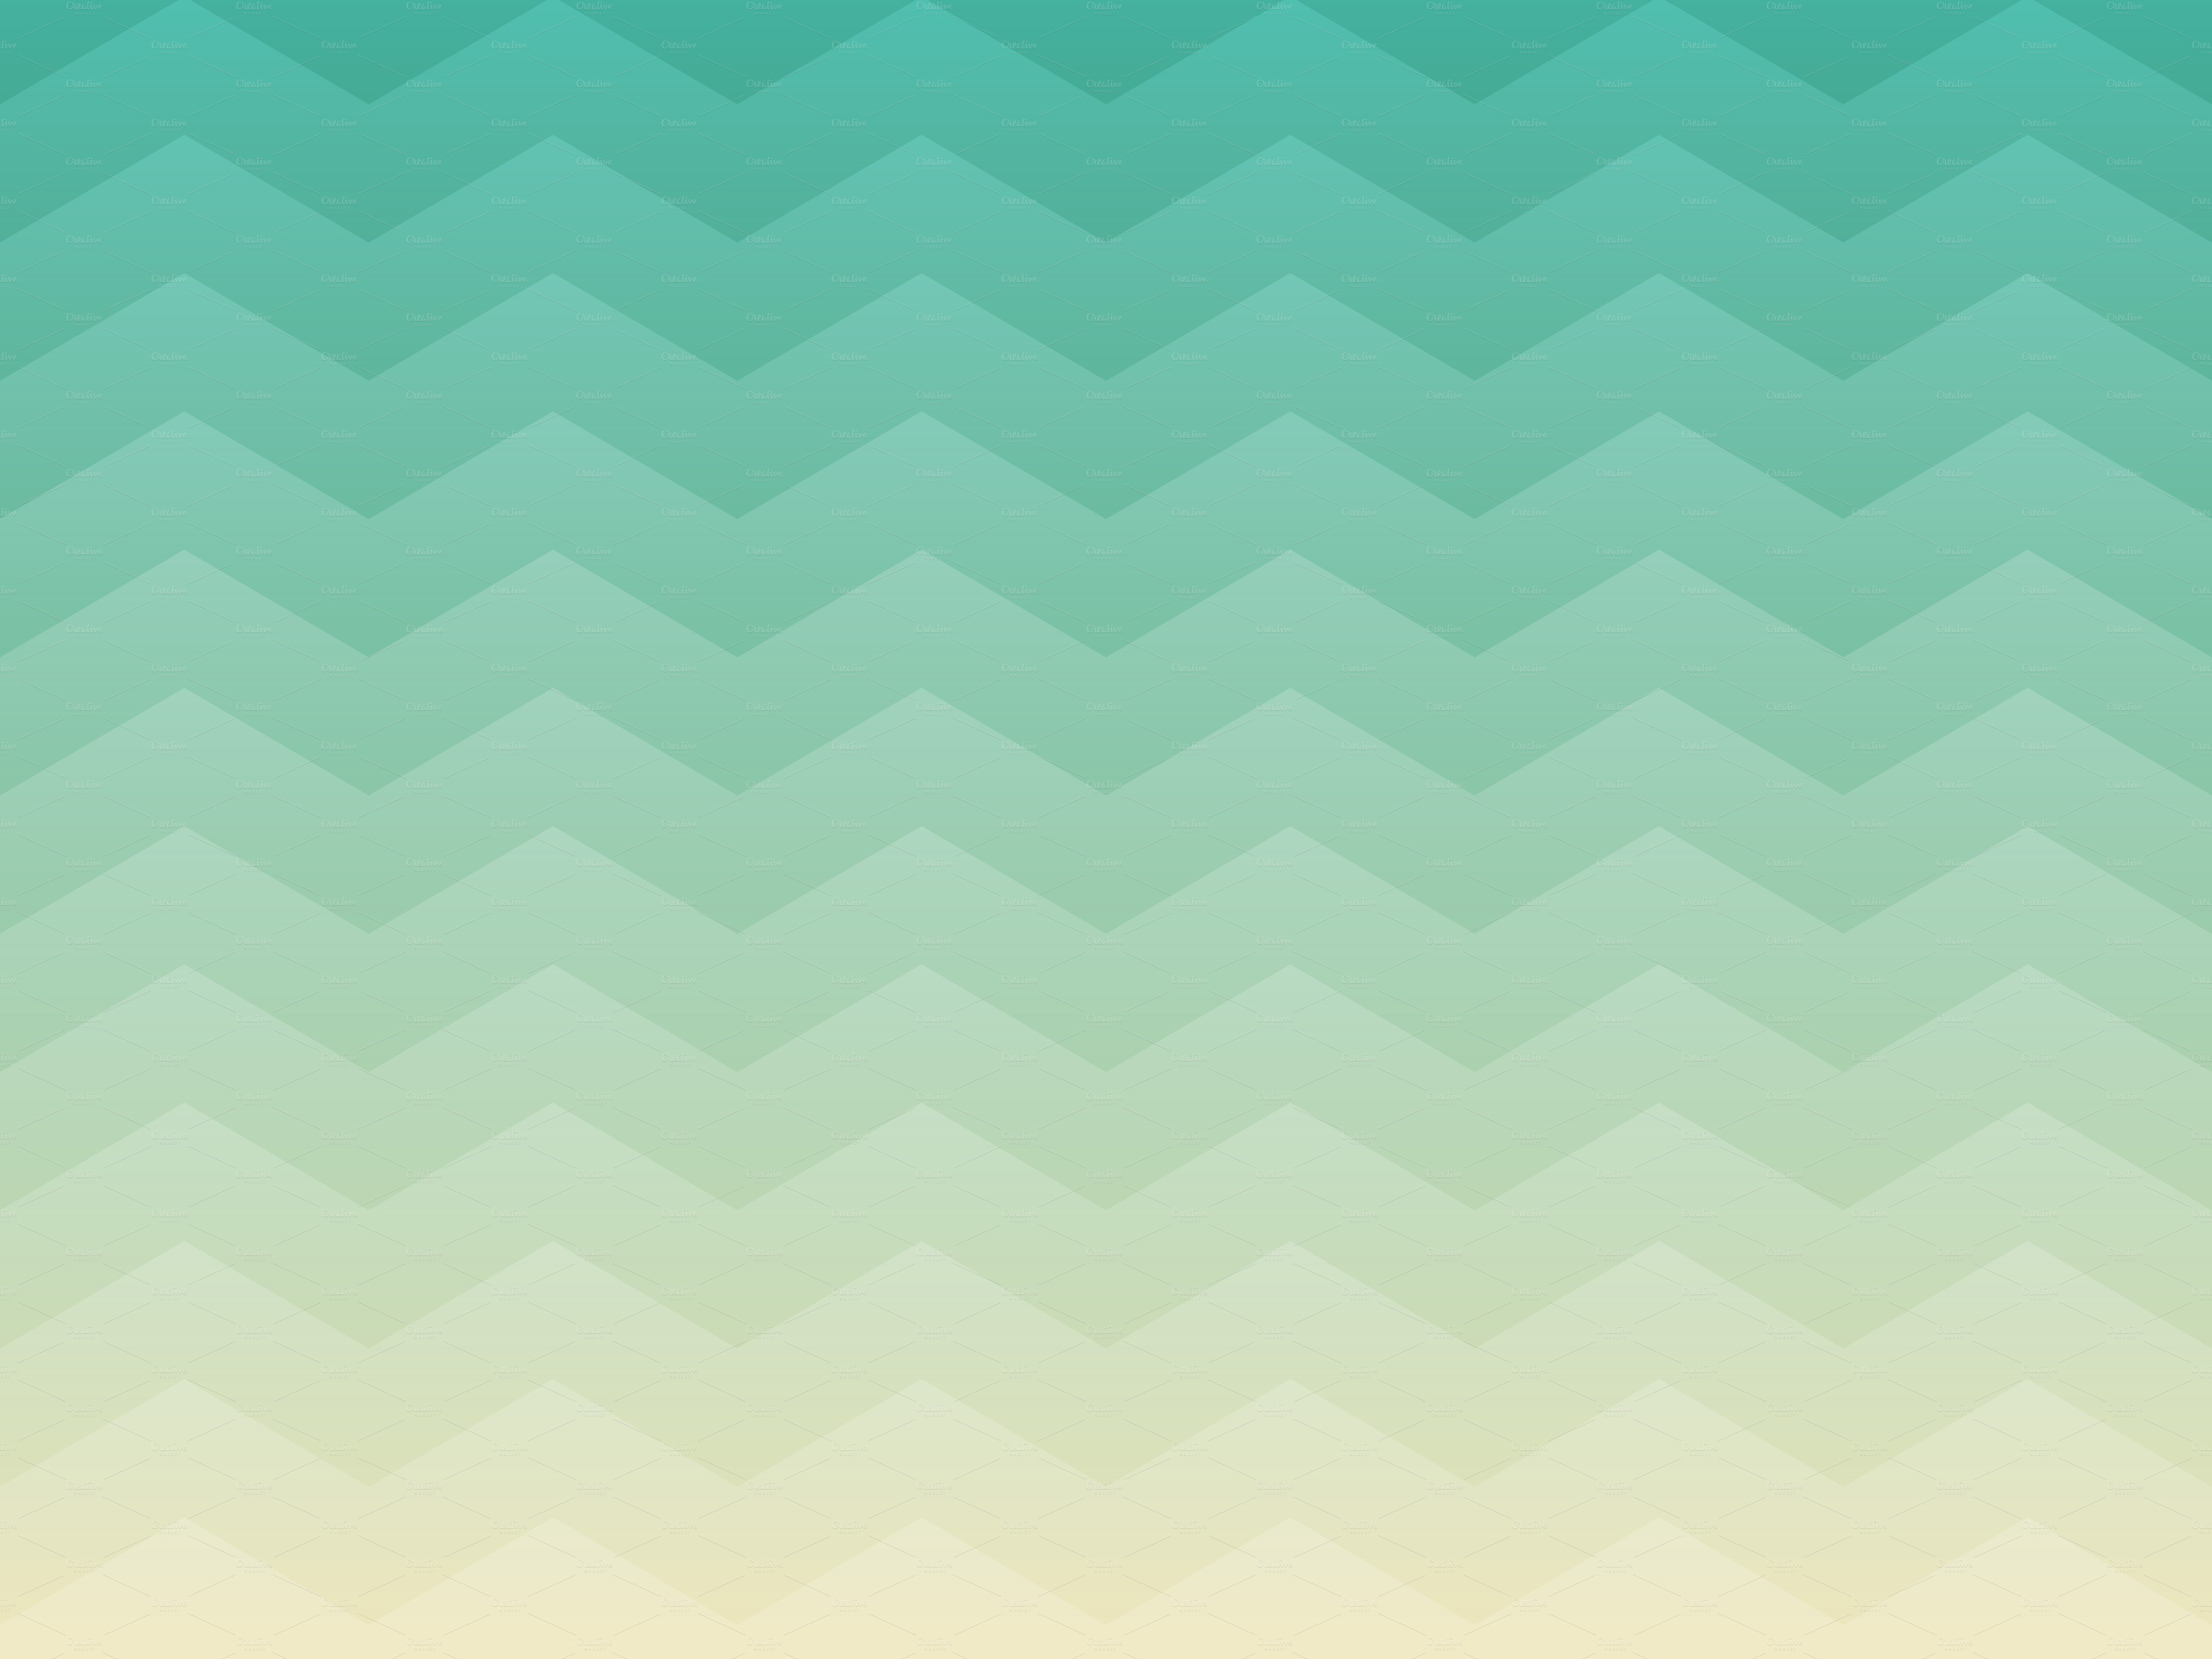 Sea geometric backgrounds Textures on Creative Market 4800x3600